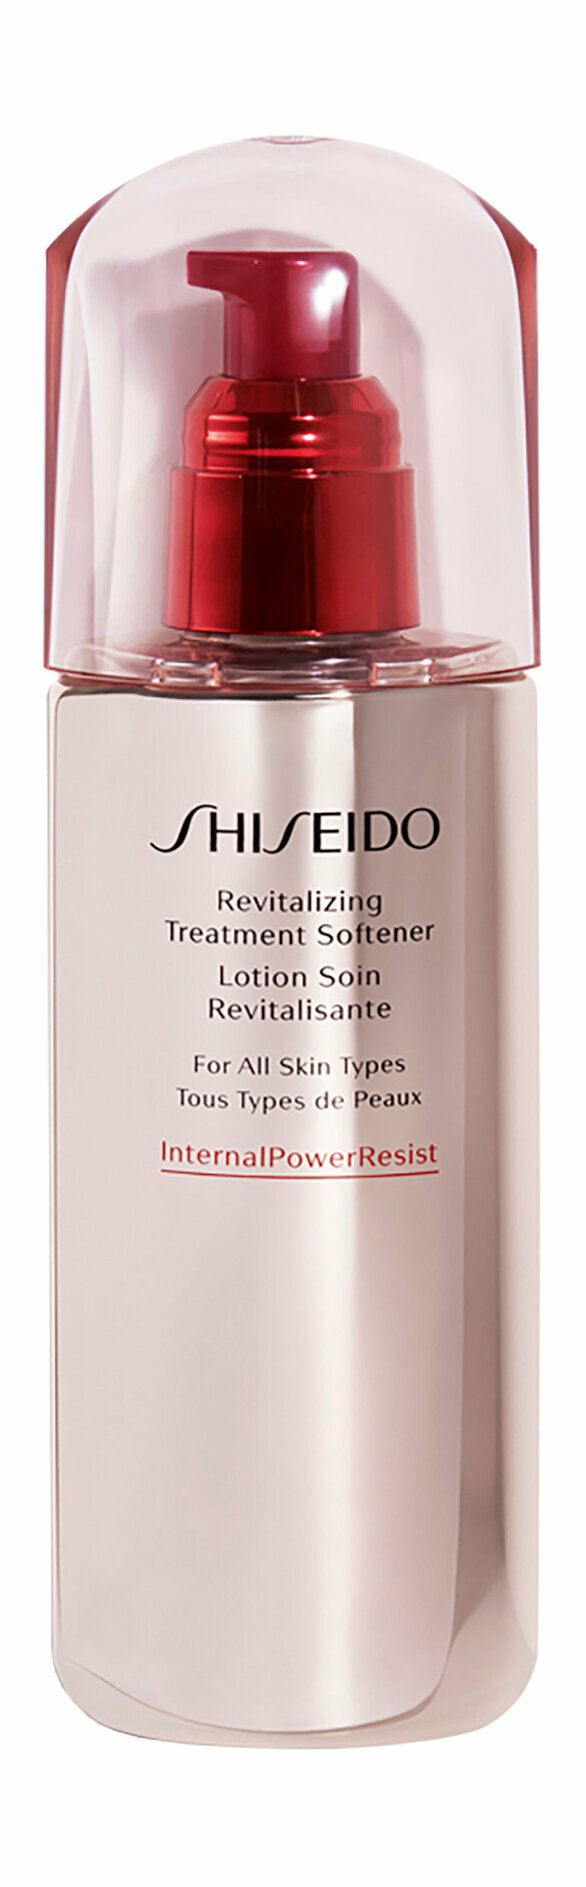 Shiseido Софтнер увлажняющий обогащенный Internal Power Resist, 150 мл